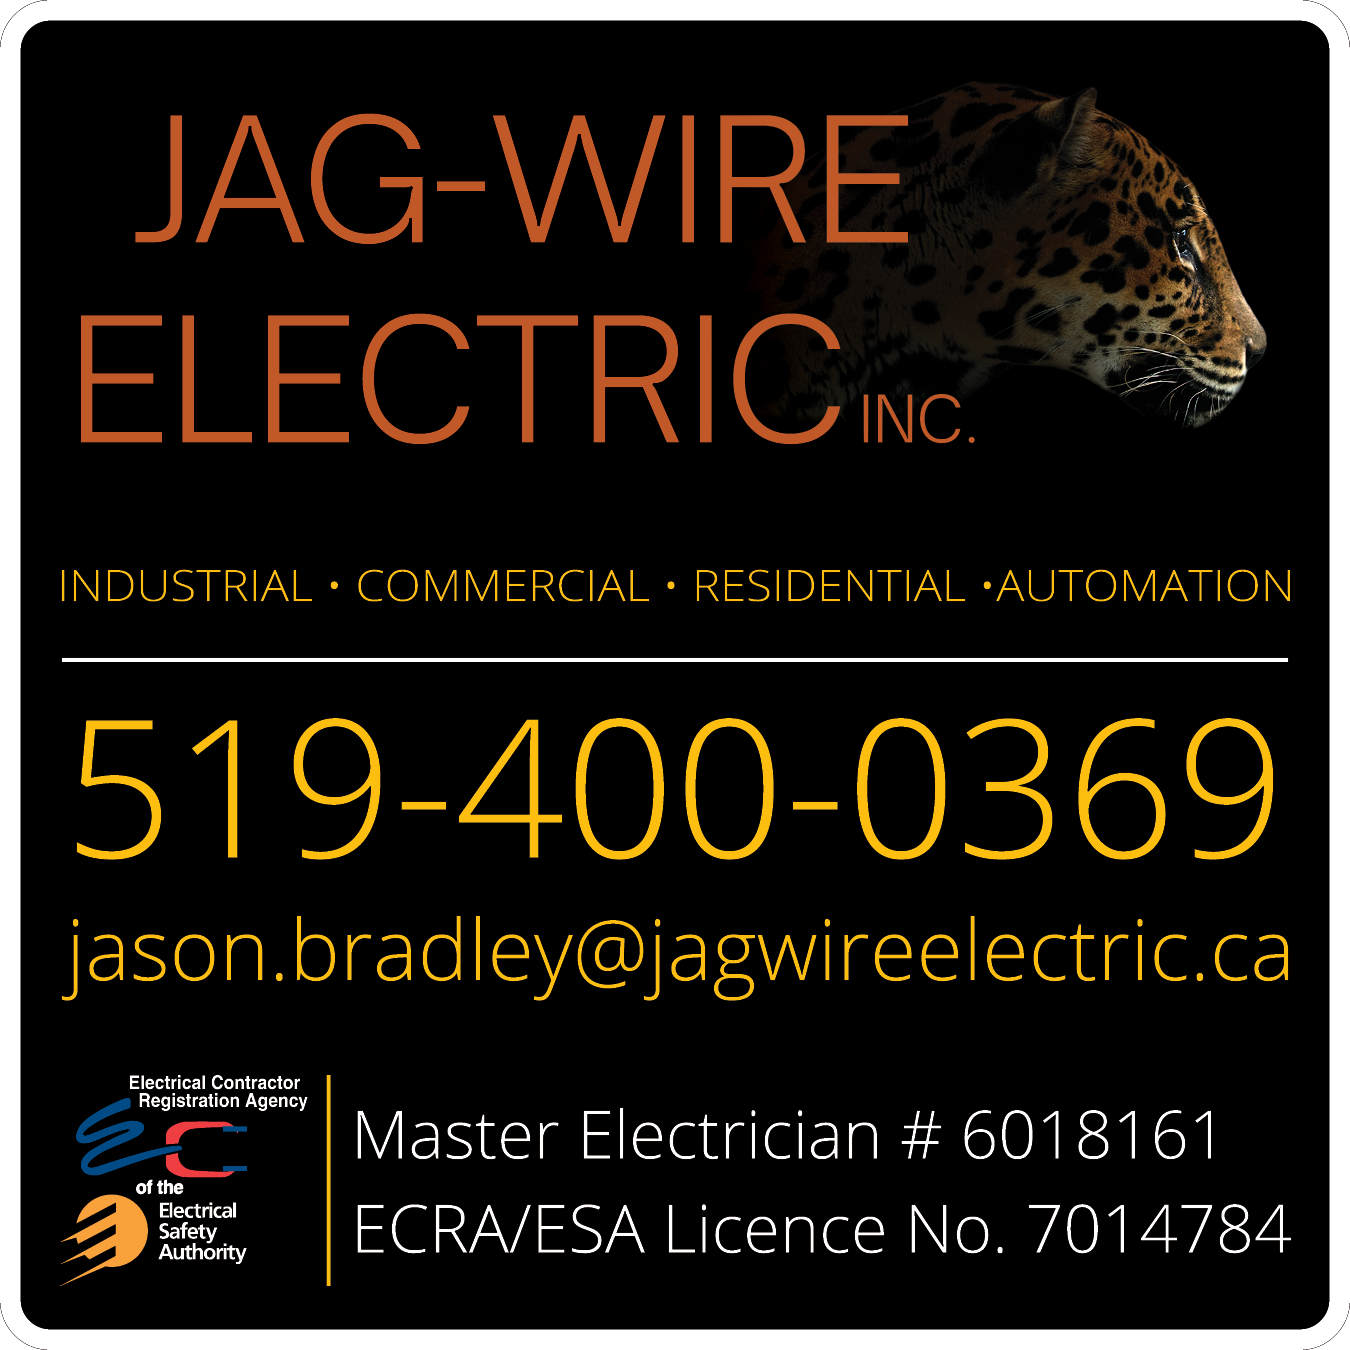 Jag-Wire Electric Inc